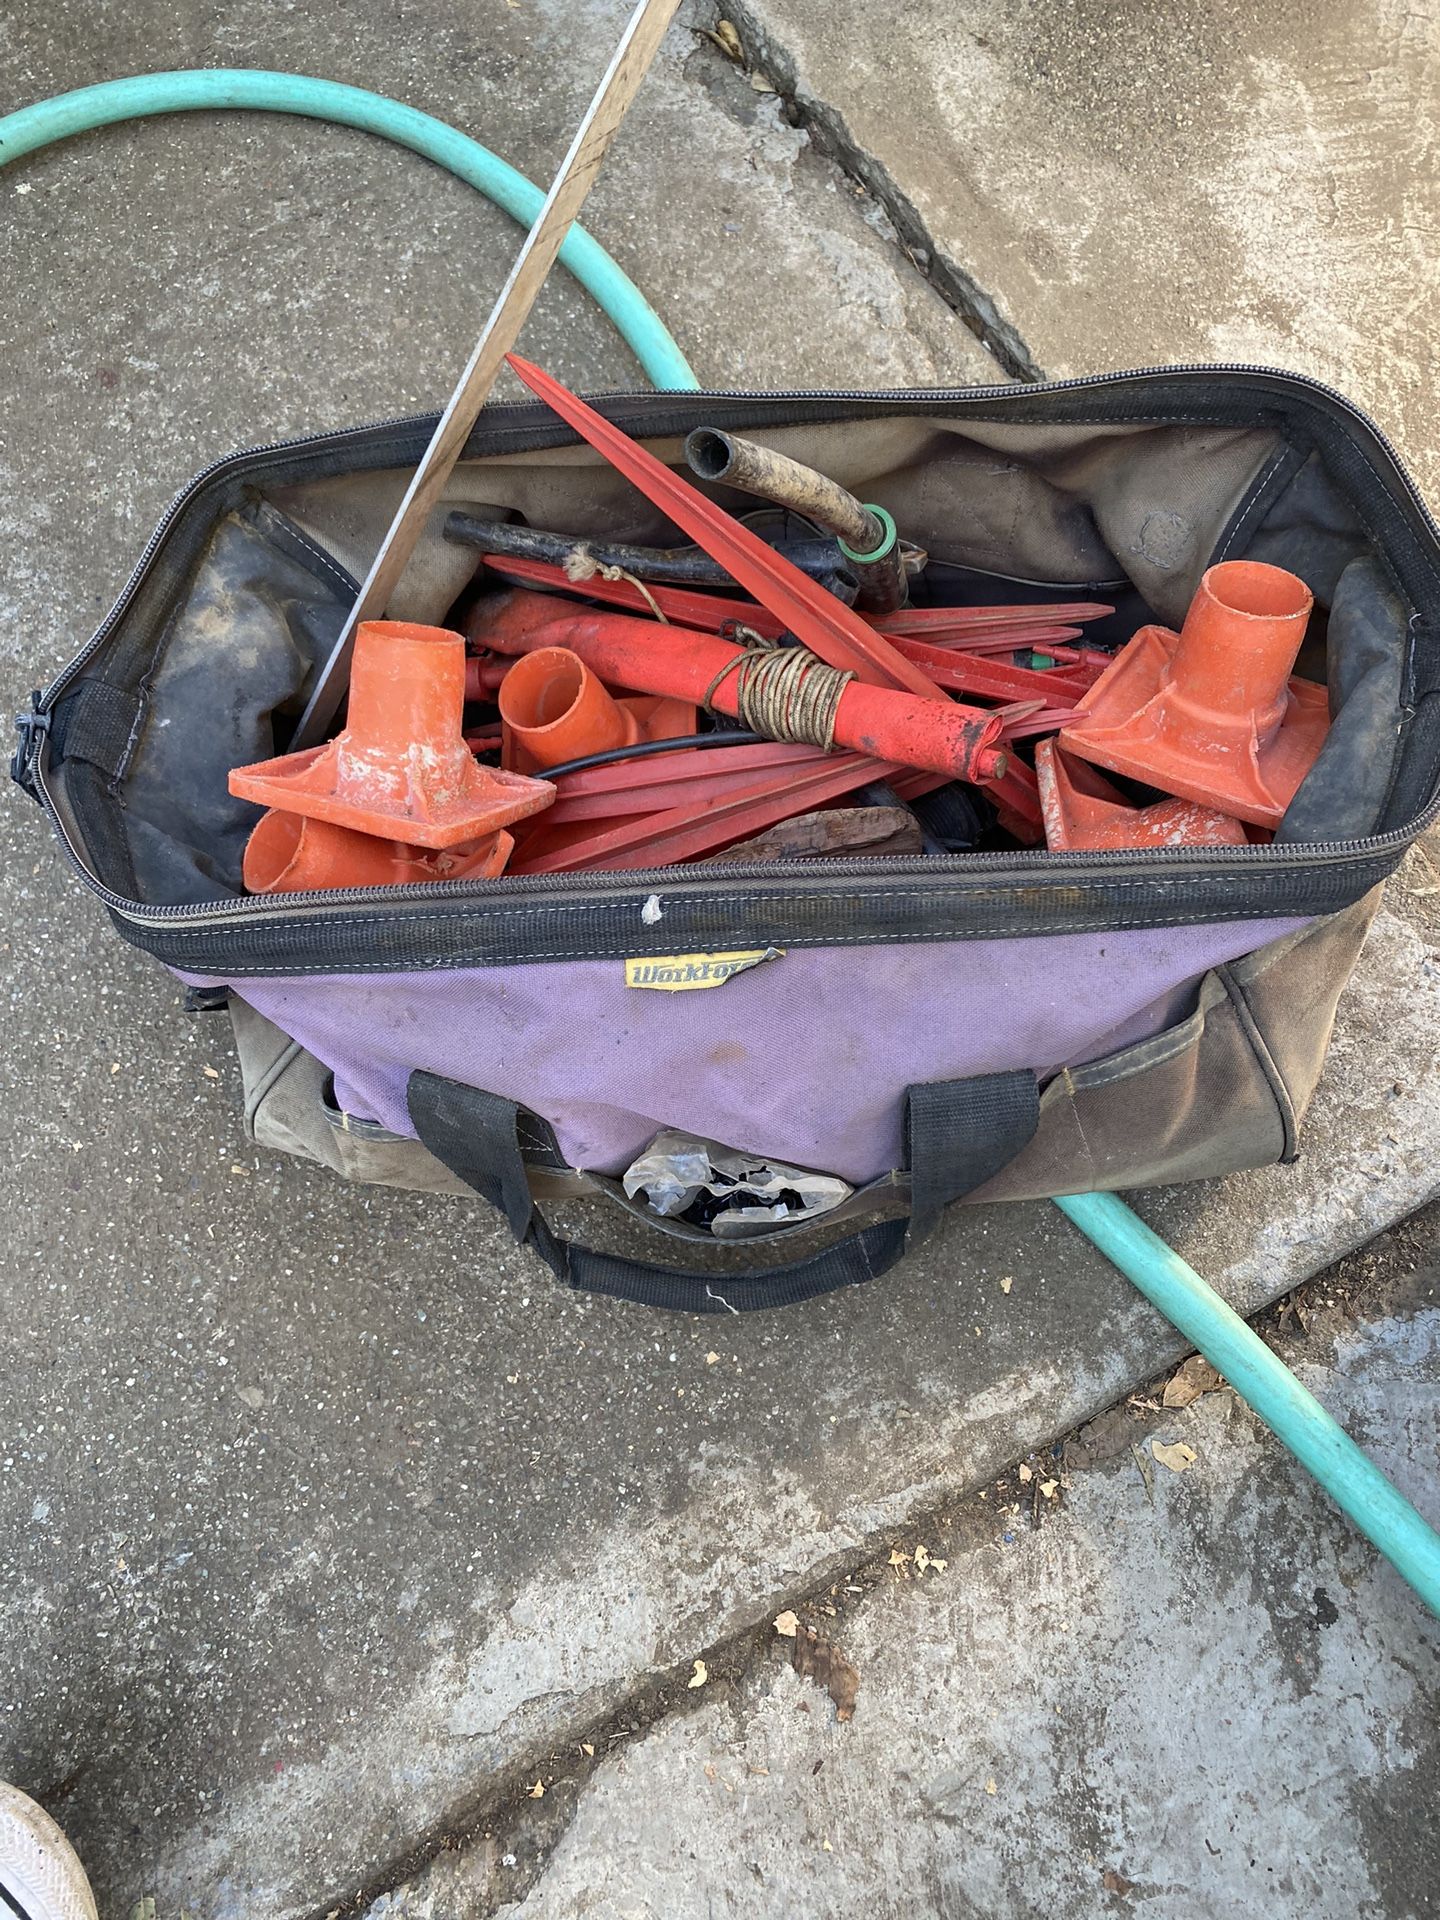 sprinkler tool bag / everything you see for $25